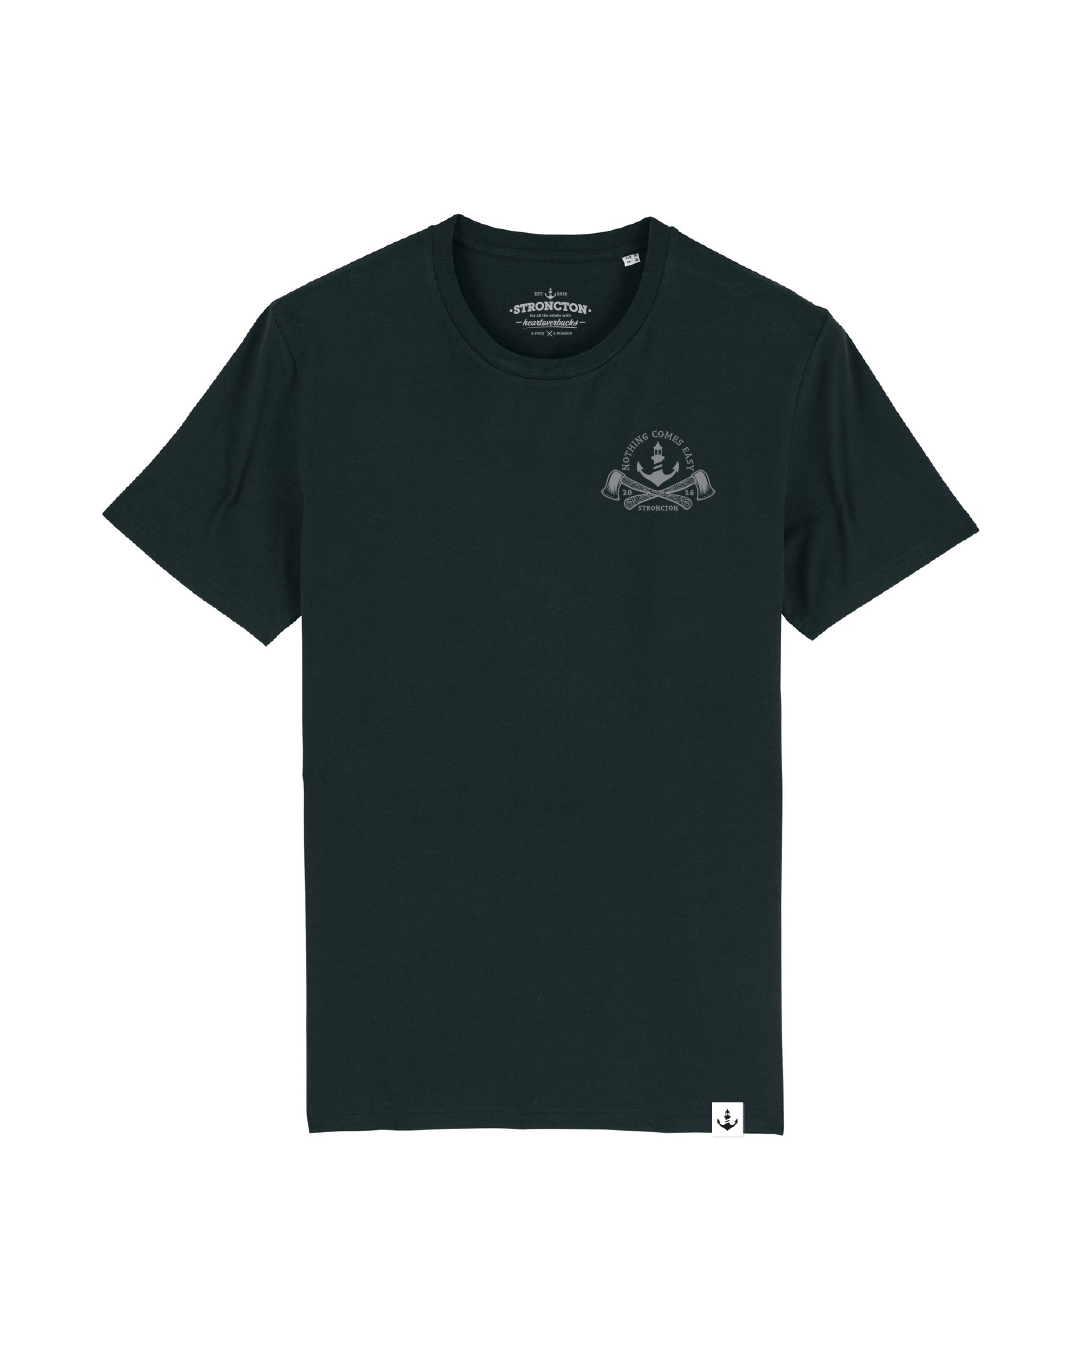 N.C.E. T-Shirt - Black/Grey